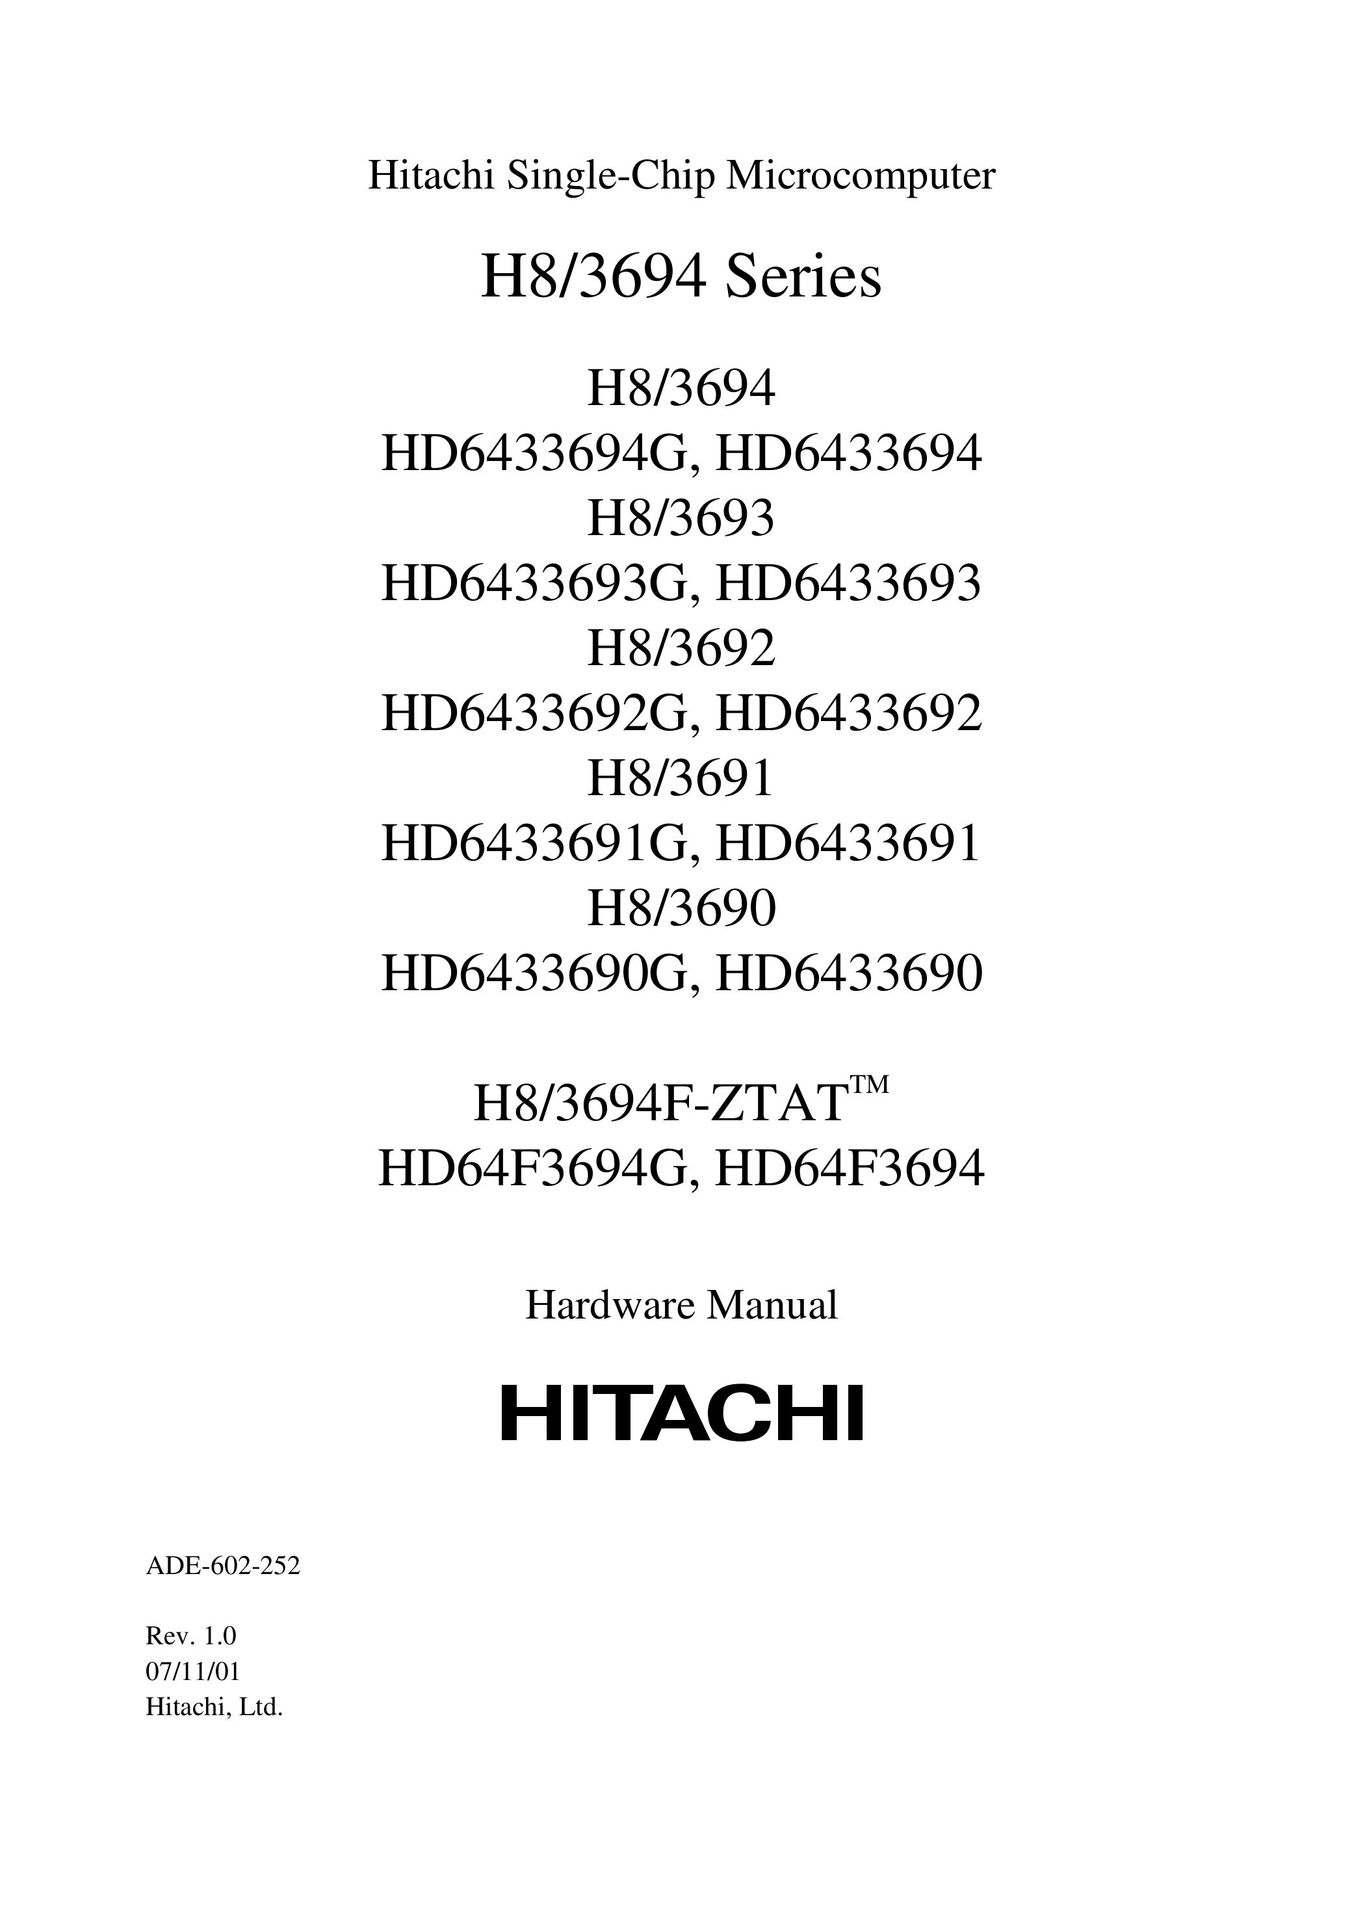 Hitachi HD6433692 TV Mount User Manual